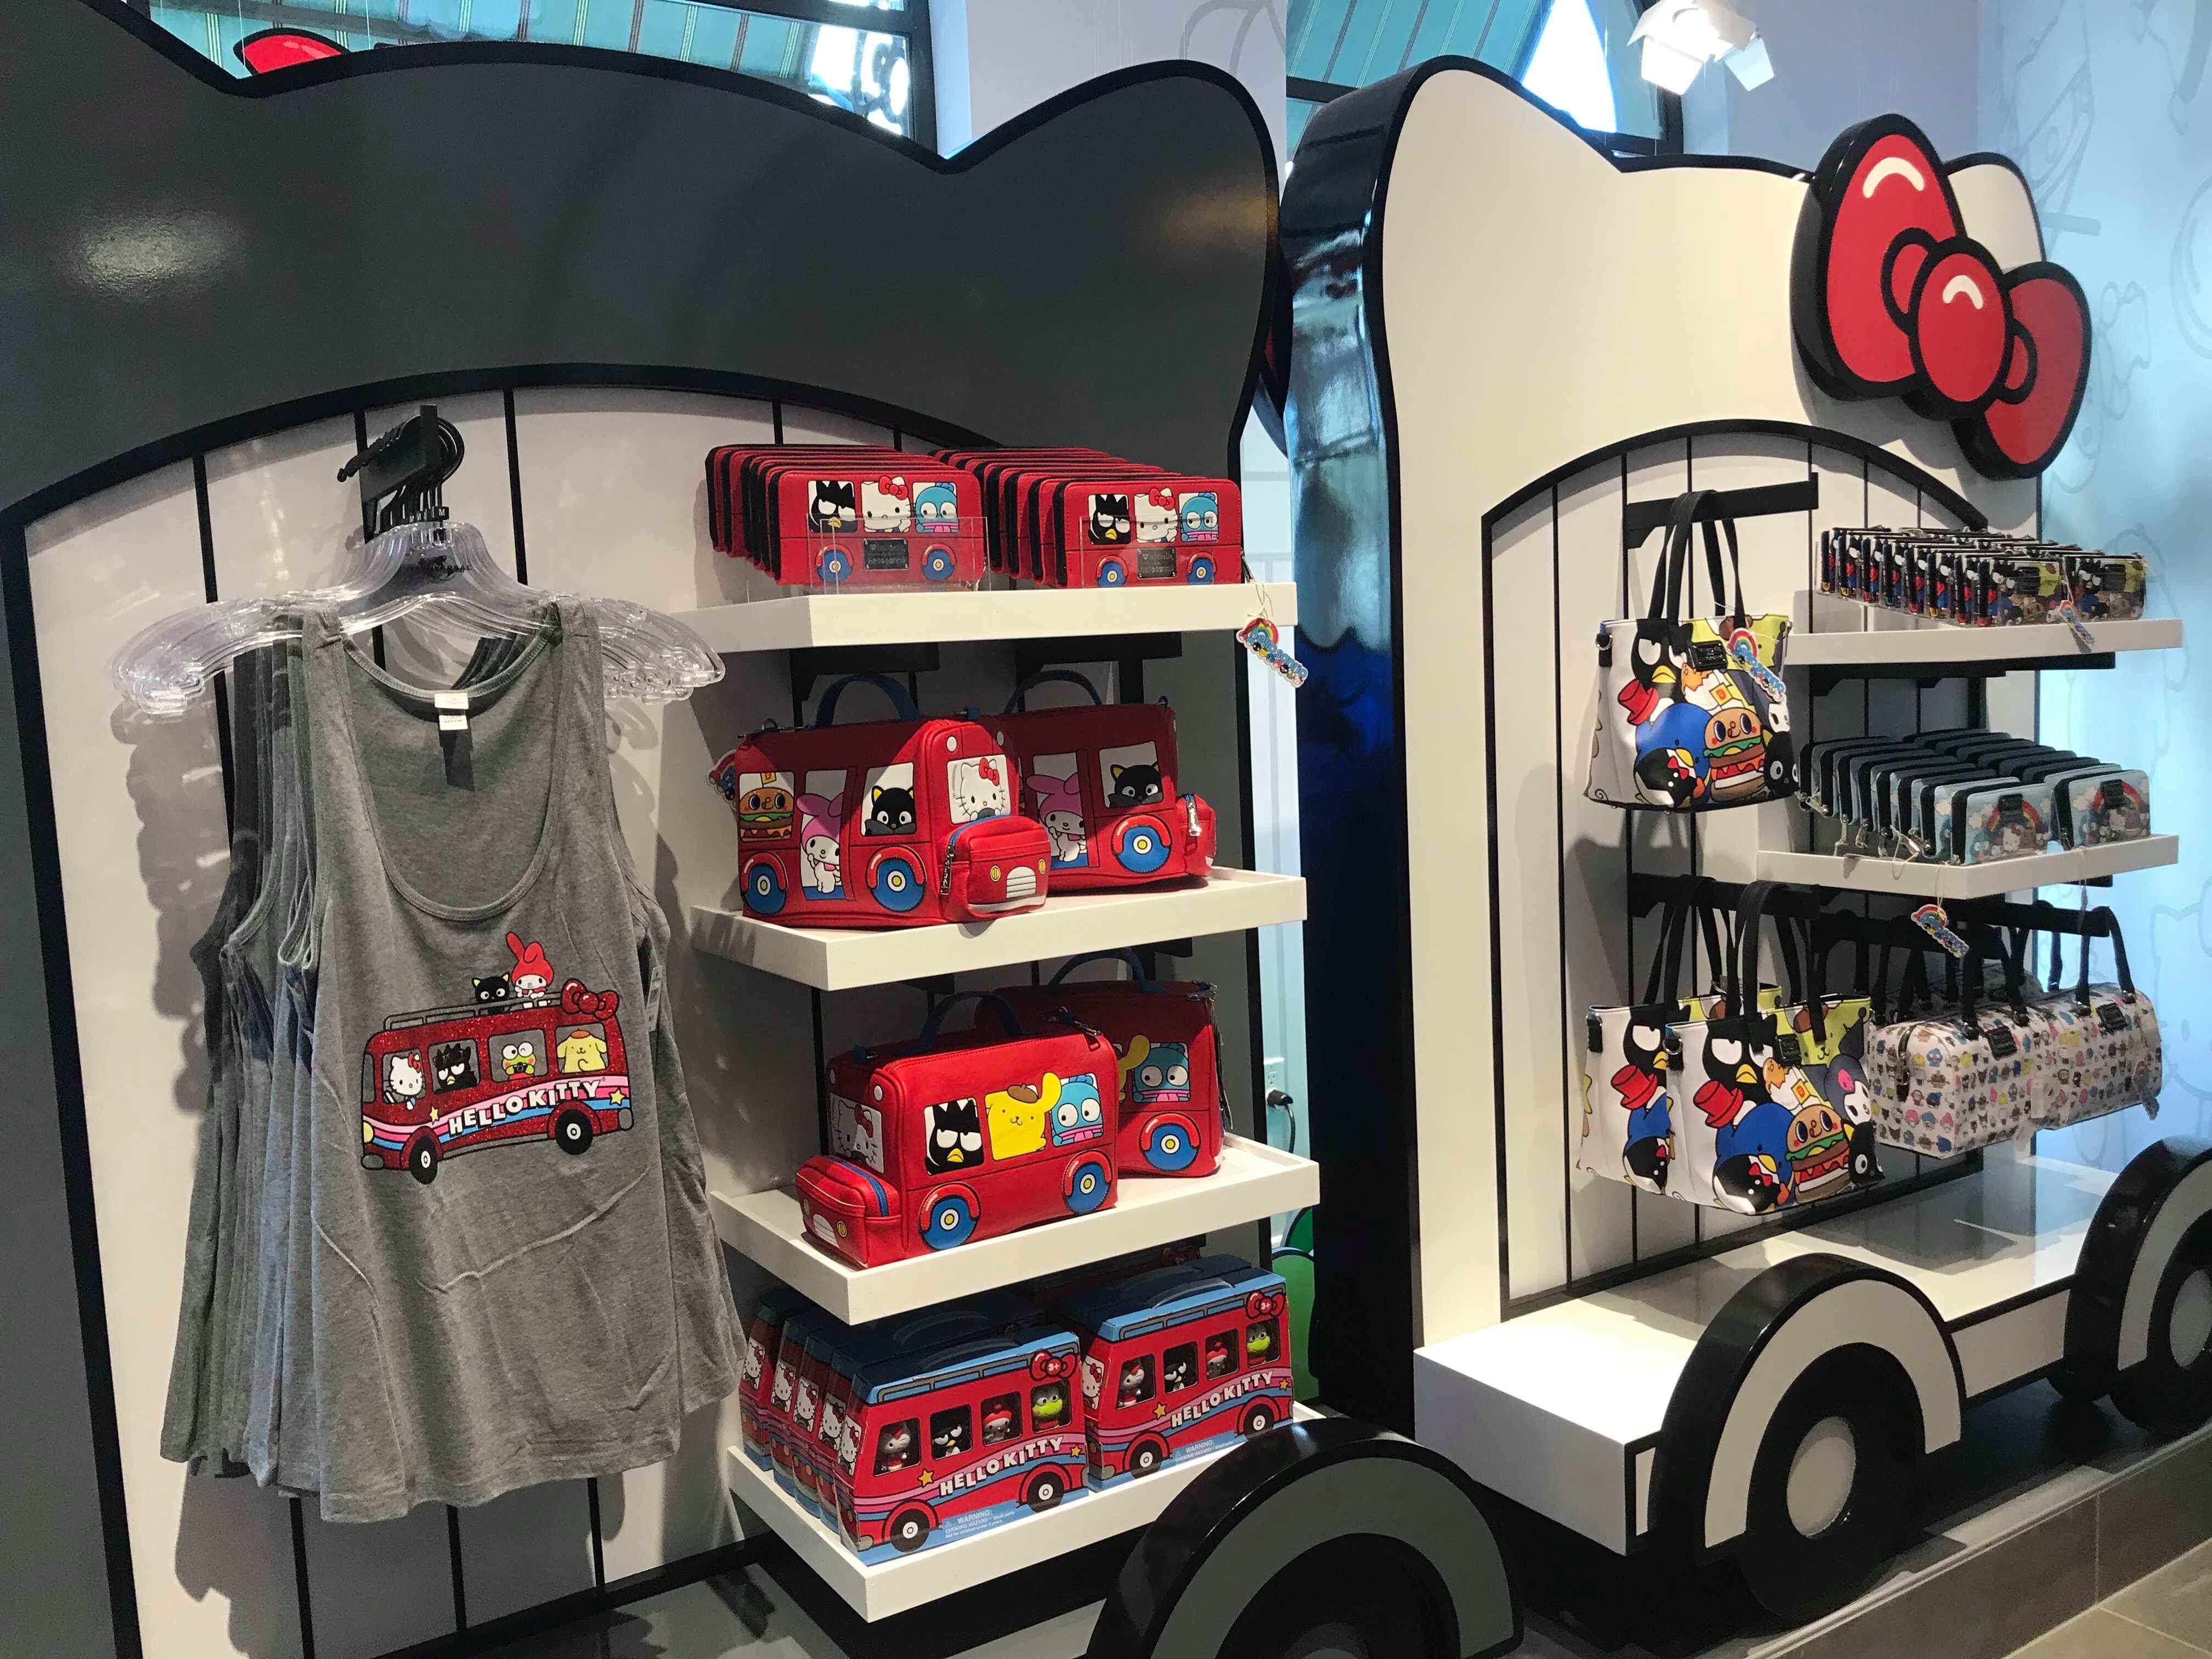 Universal Orlando opens Hello Kitty shop